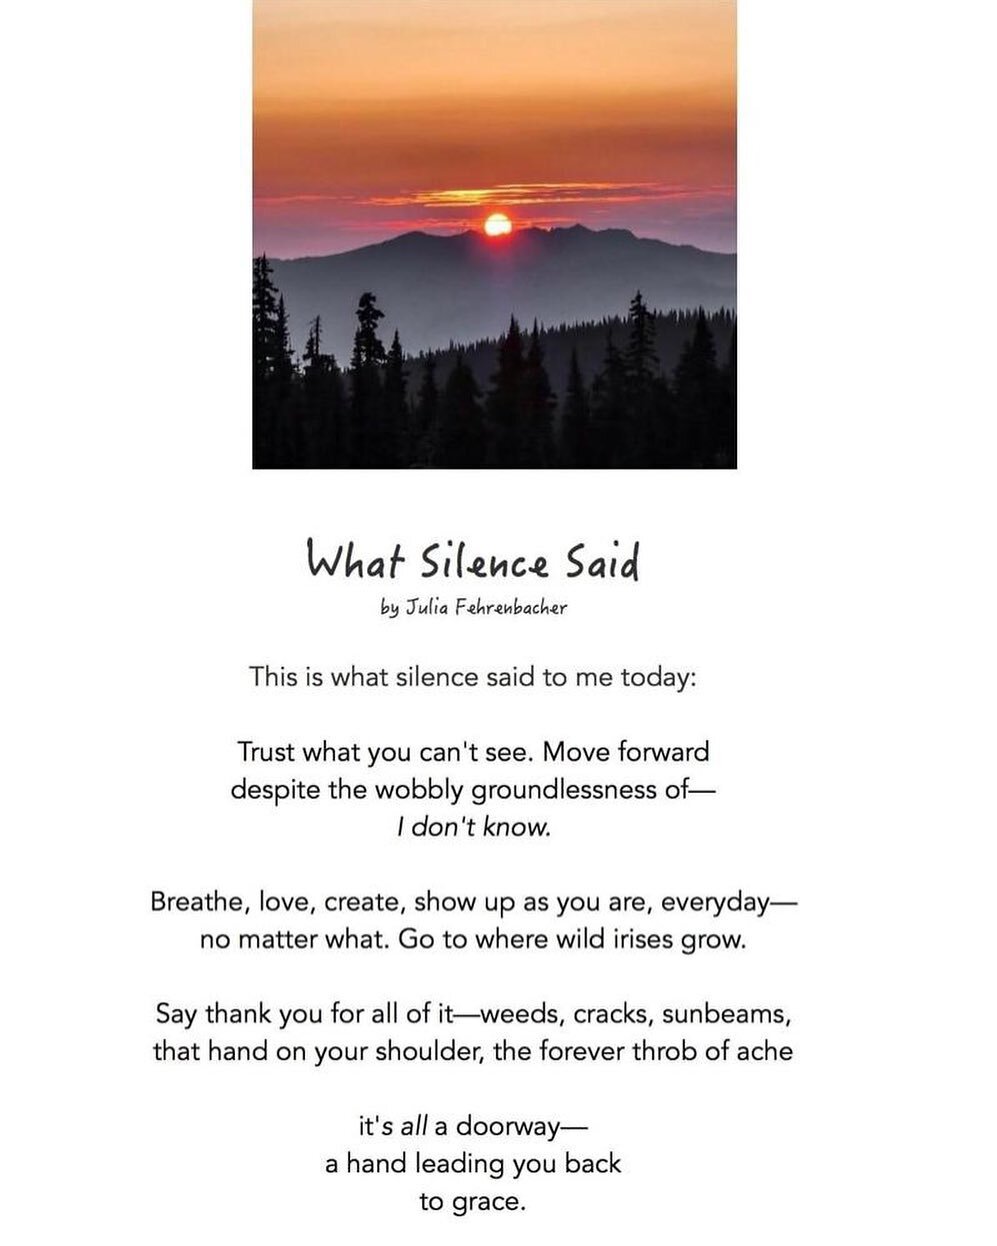 What Silence said by Julia Fehrenbacher #poetryoftheday #saltlakecitytherapy